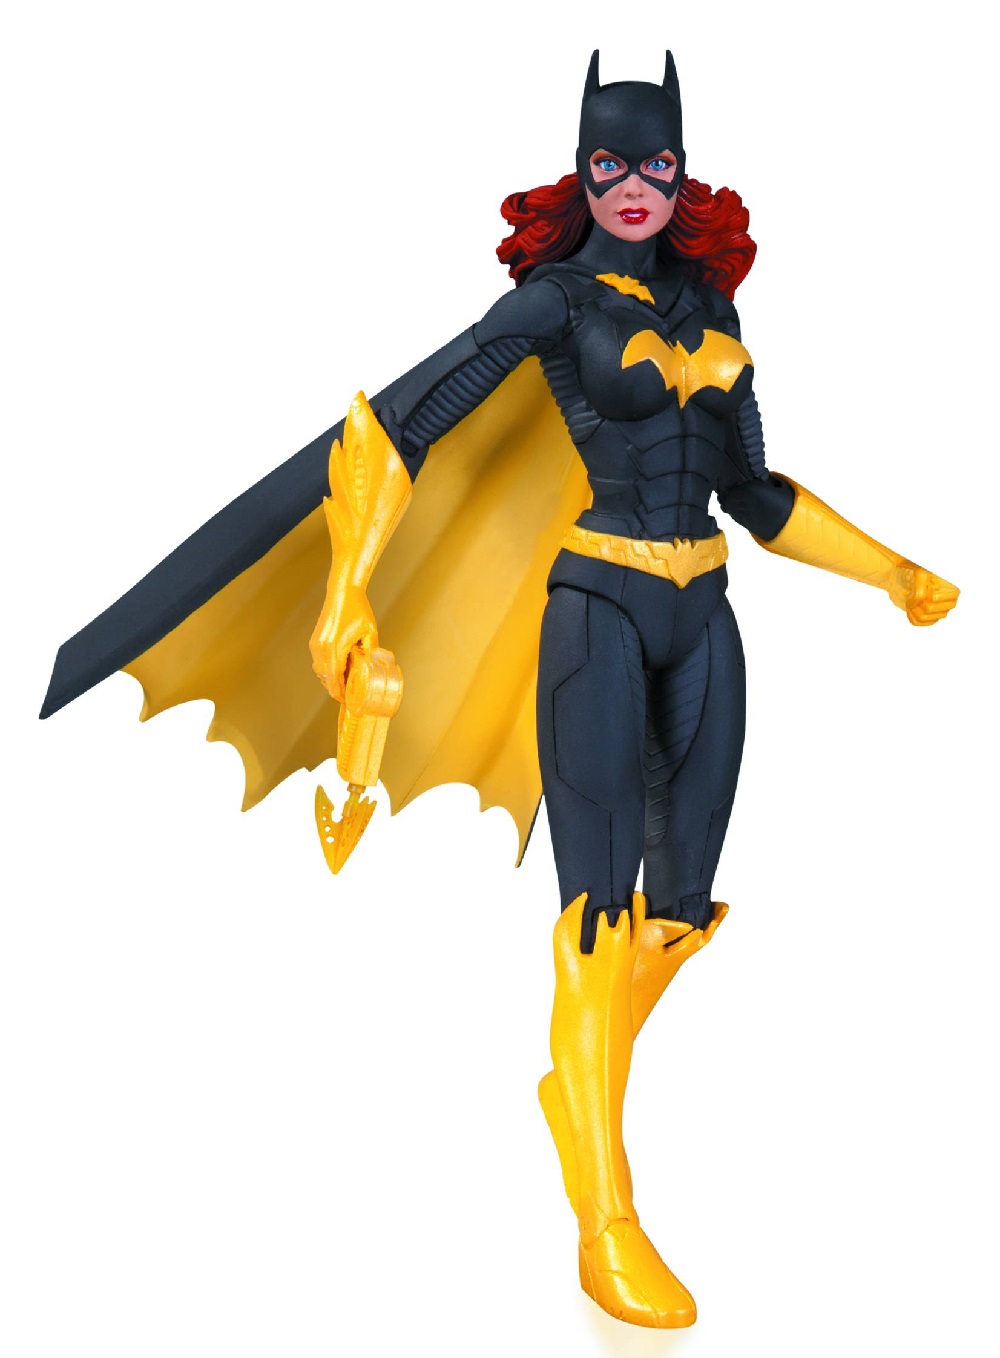 New 52 Action Figures Batgirl